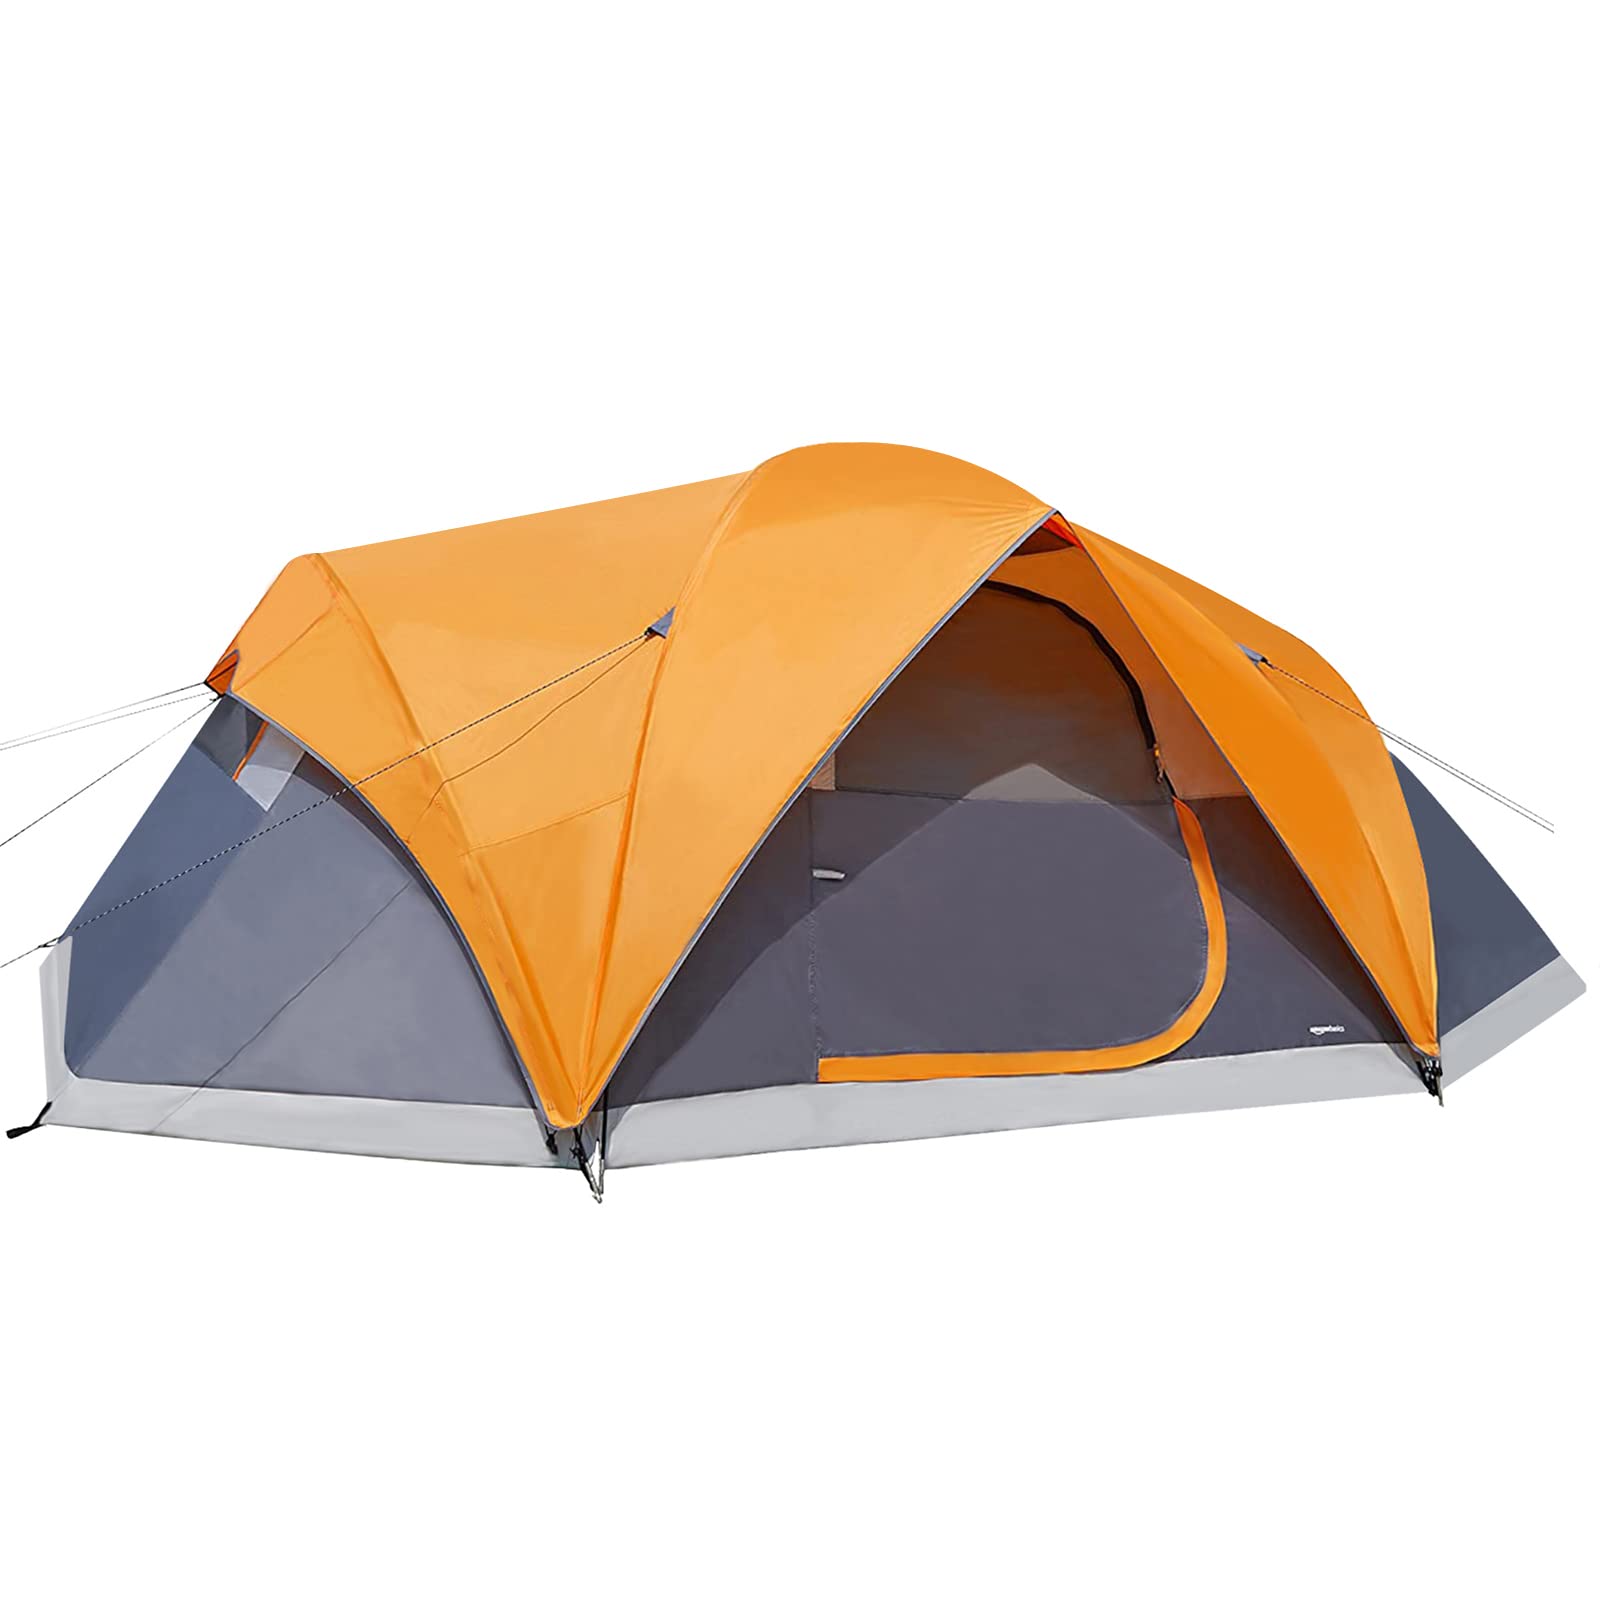 8-Person Amazon Basics Dome Camping Tent w/ Rainfly 15 x 9 x 6 Feet (Orange/ Grey) $67.80 + Free Shipping